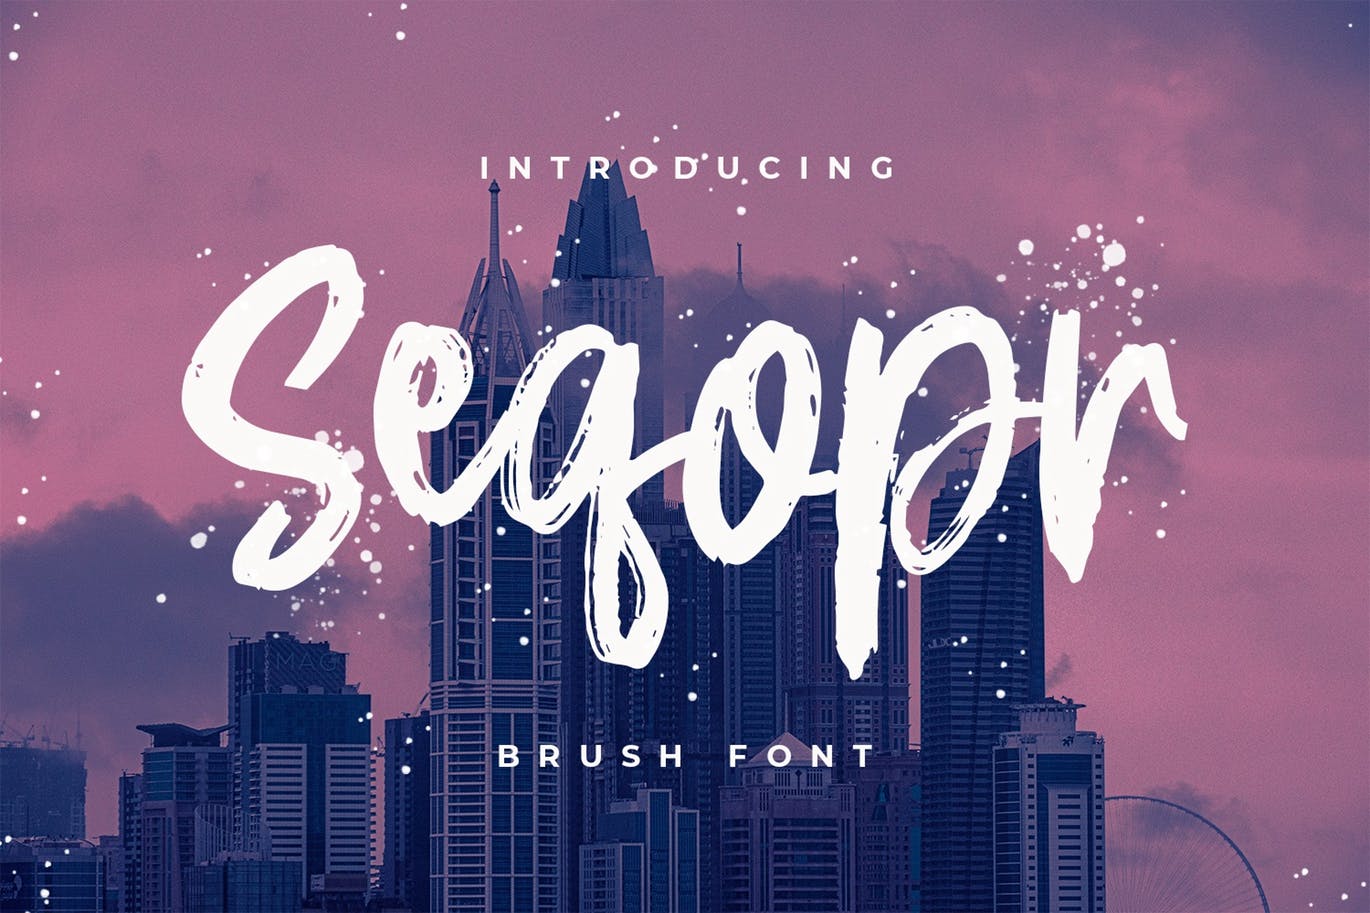 Logo/印刷设计英文笔刷字体蚂蚁素材精选 Seqopr – The Brush Font插图